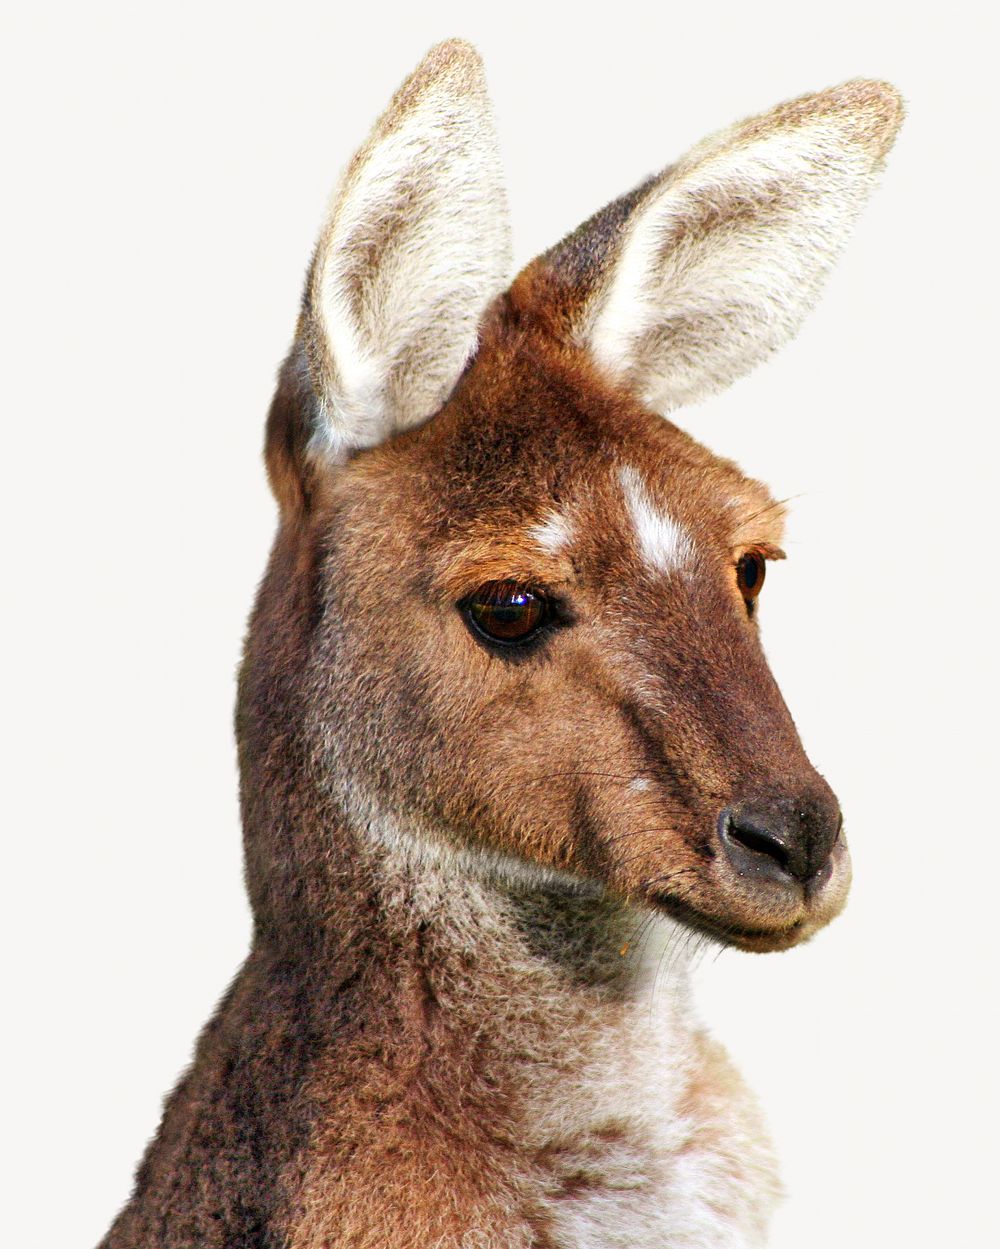 Kangaroo head isolated image on white